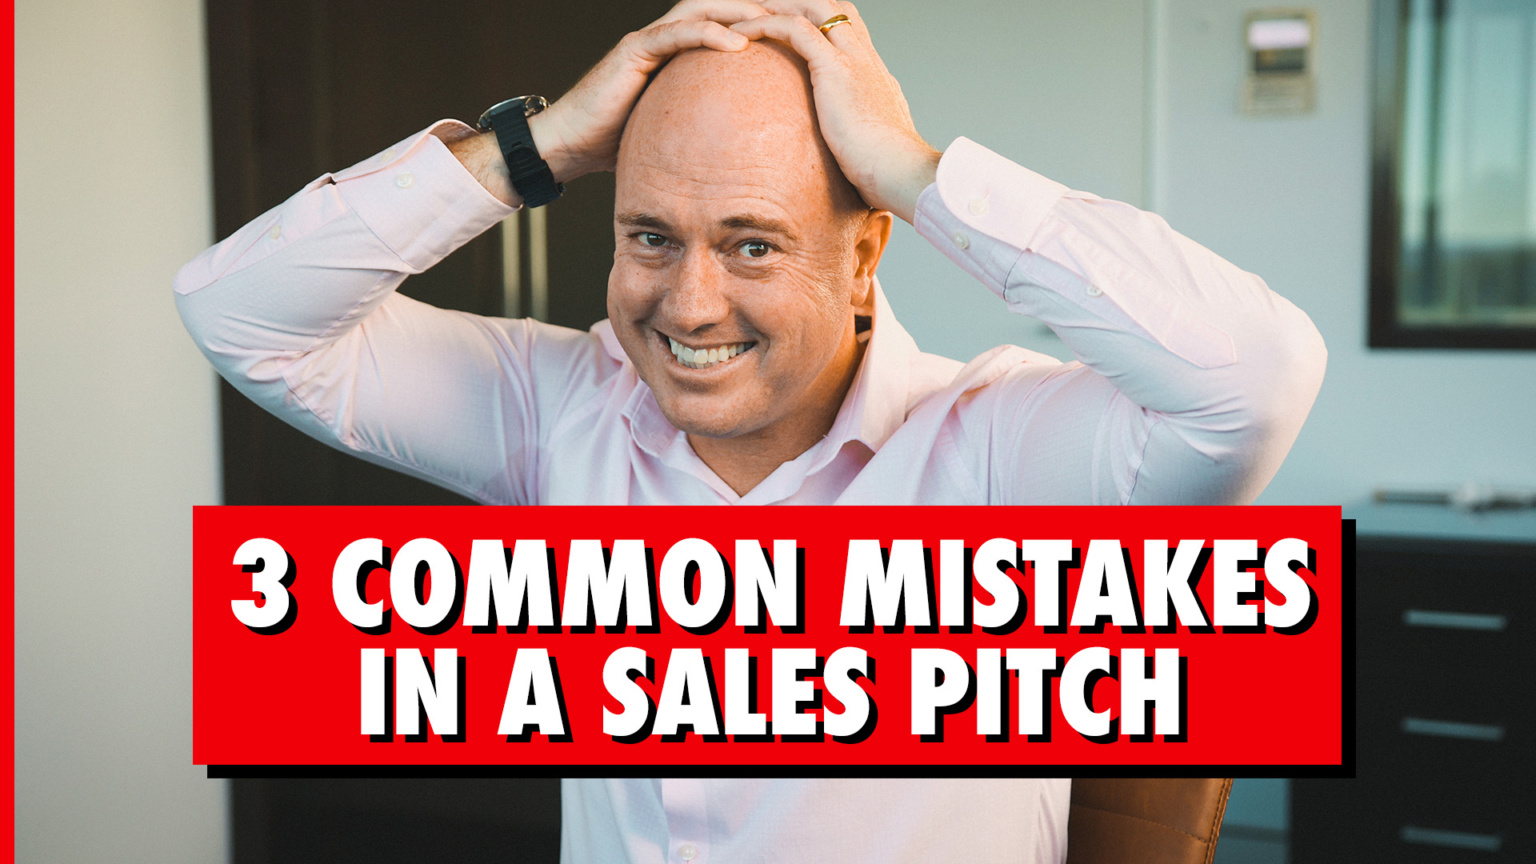 Trevor Ambrose Public Speaking Sales Training Sales Pitch Mistakes Thumbnail Blog